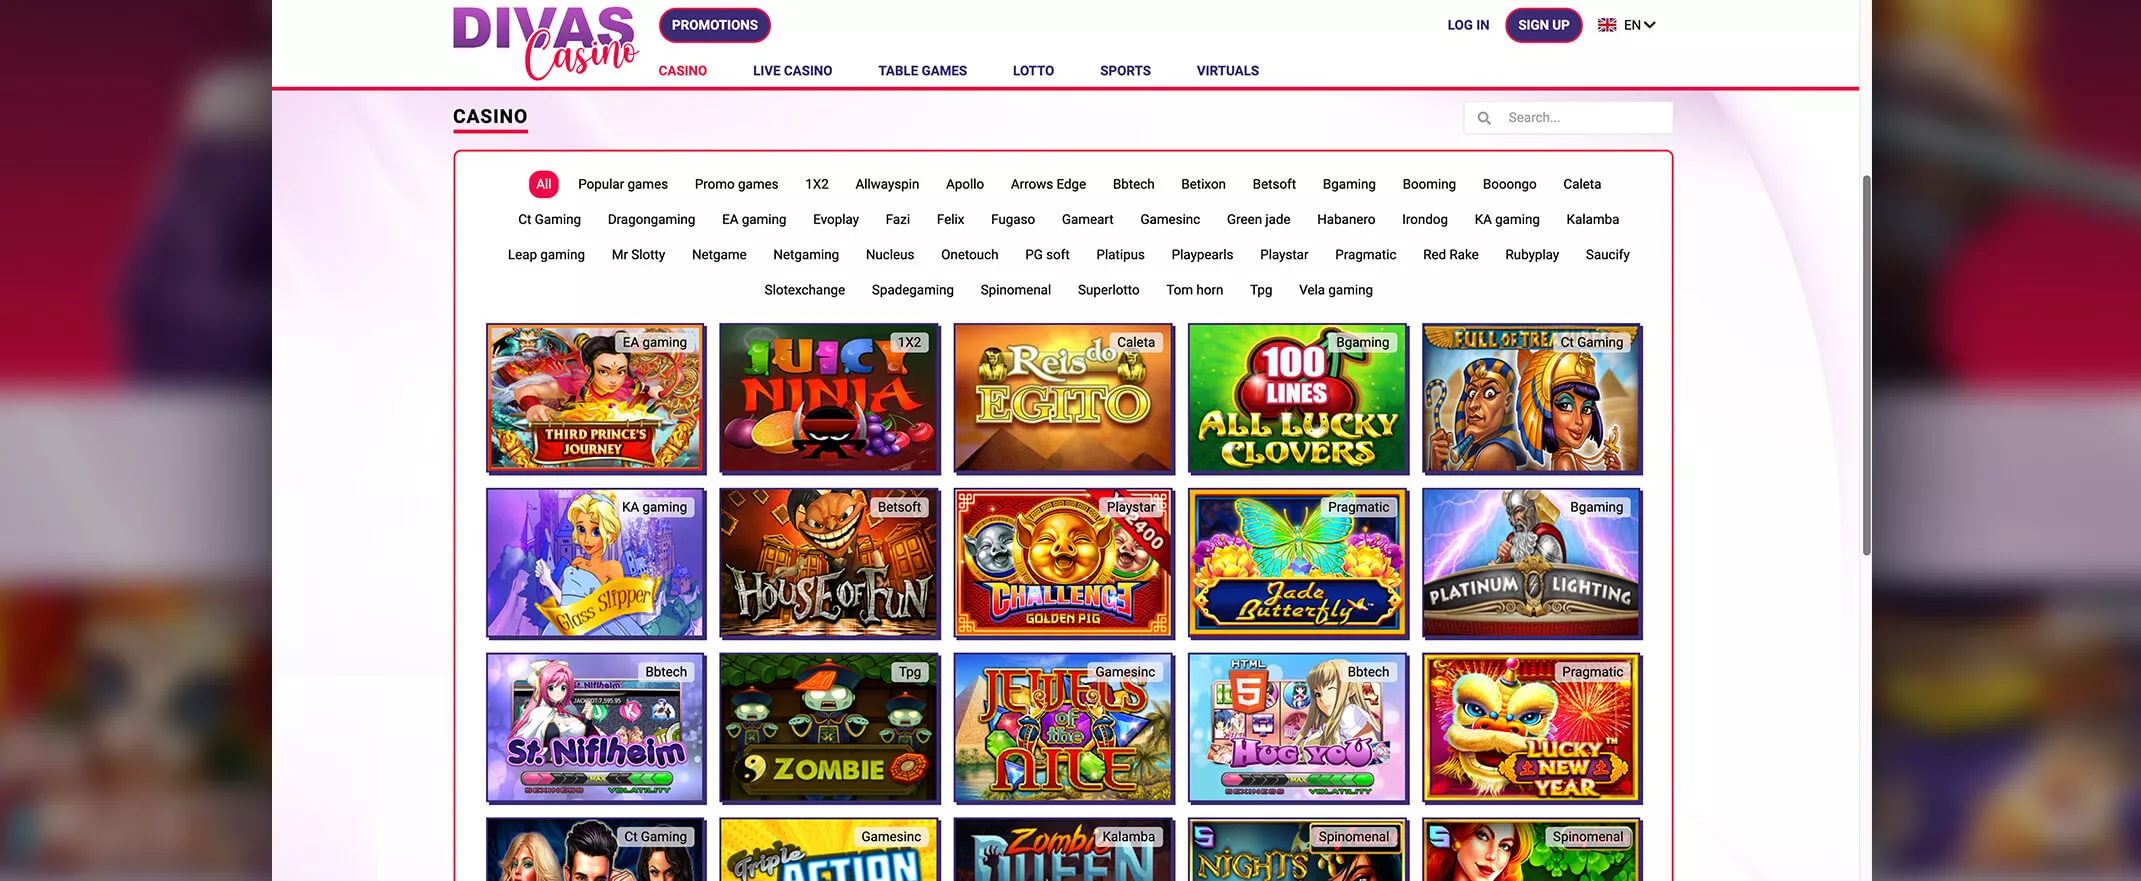 DivasLuck casino review screenshot of the games